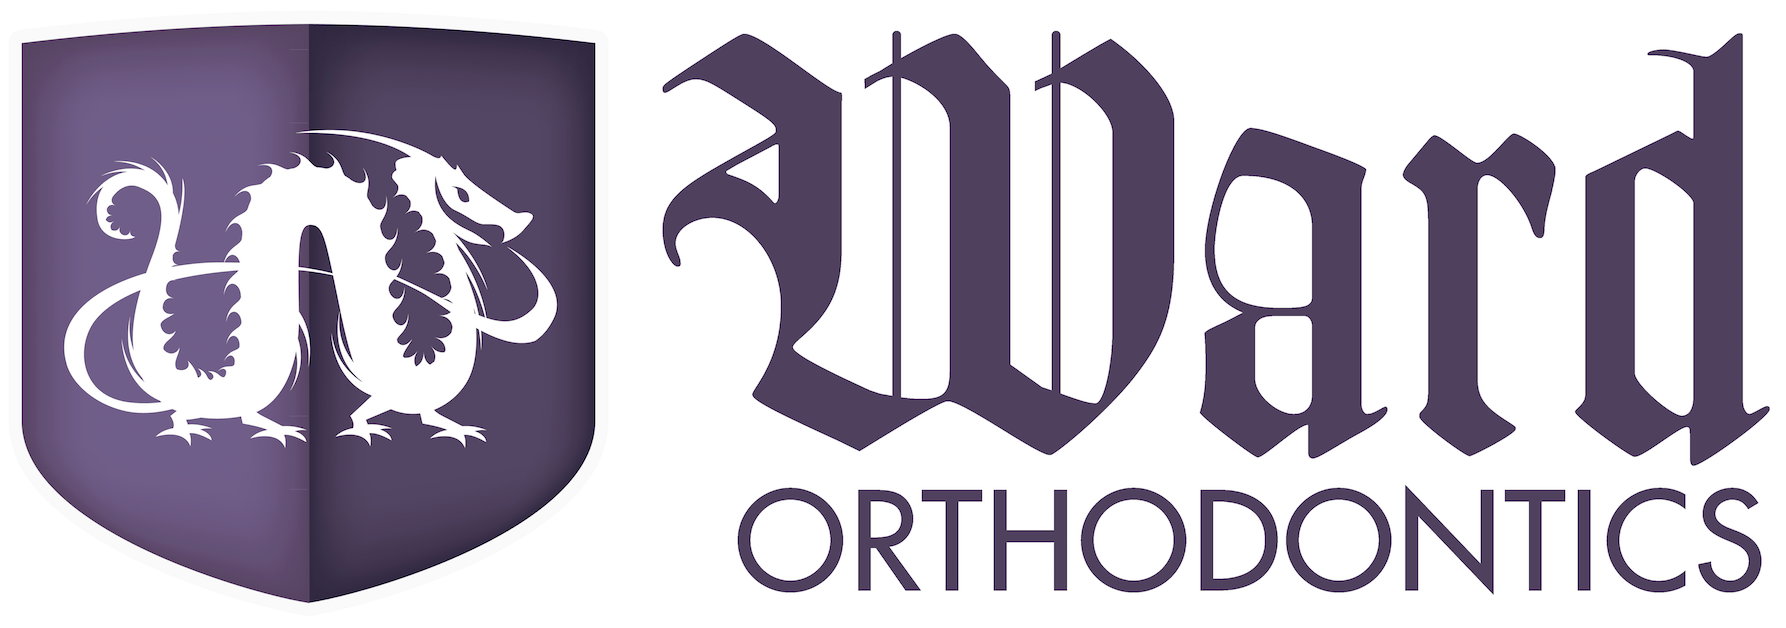 Ward Orthodontics